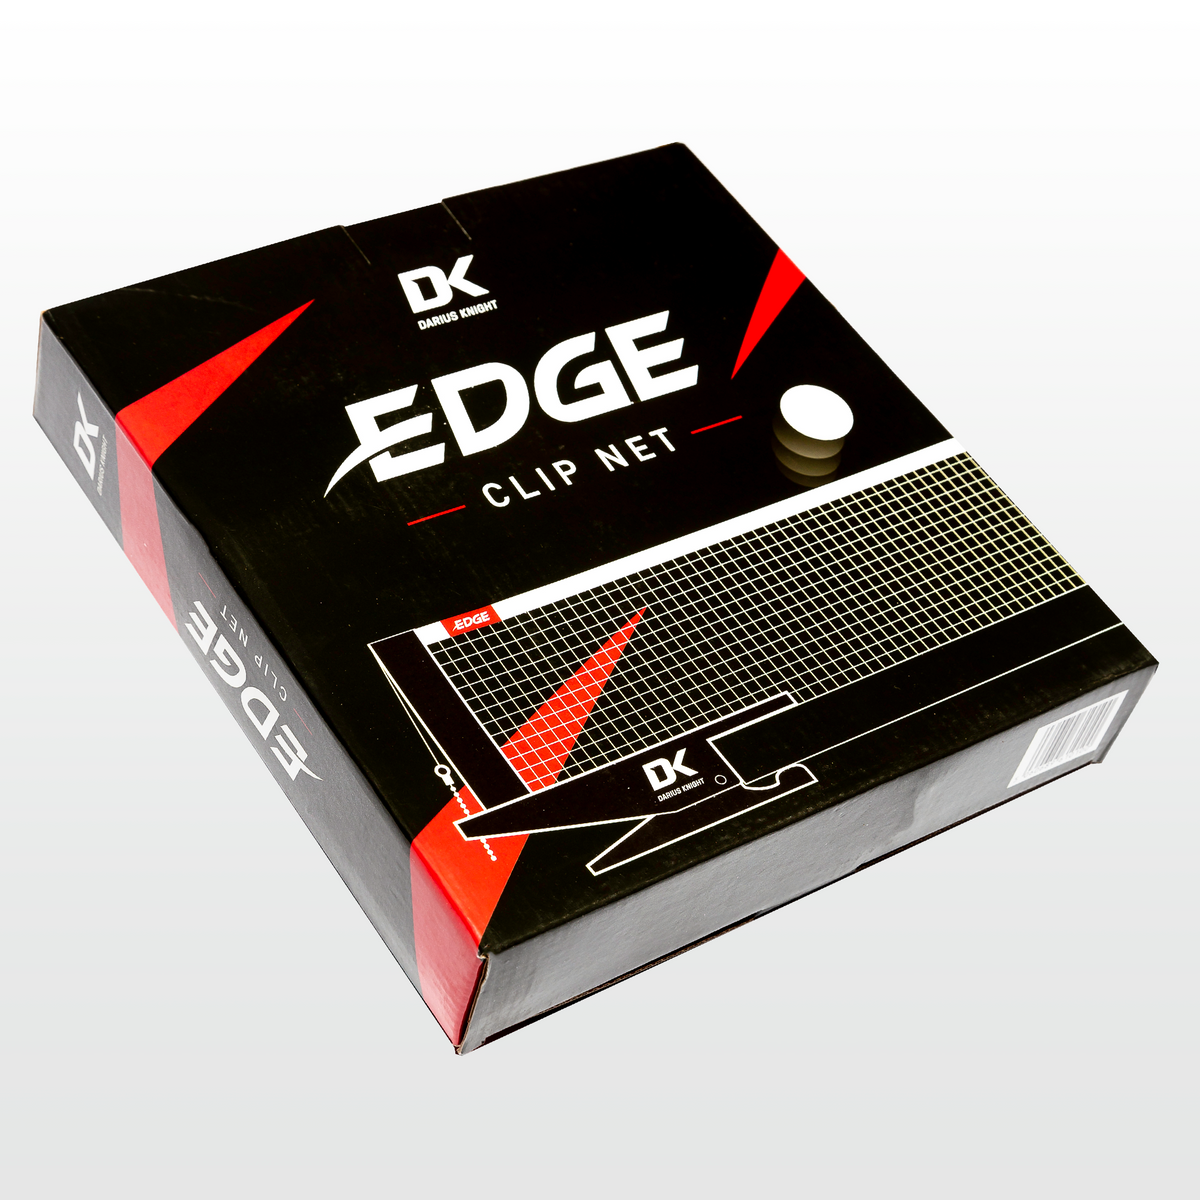 DK Edge Clip Net & Post Set - DK Sports